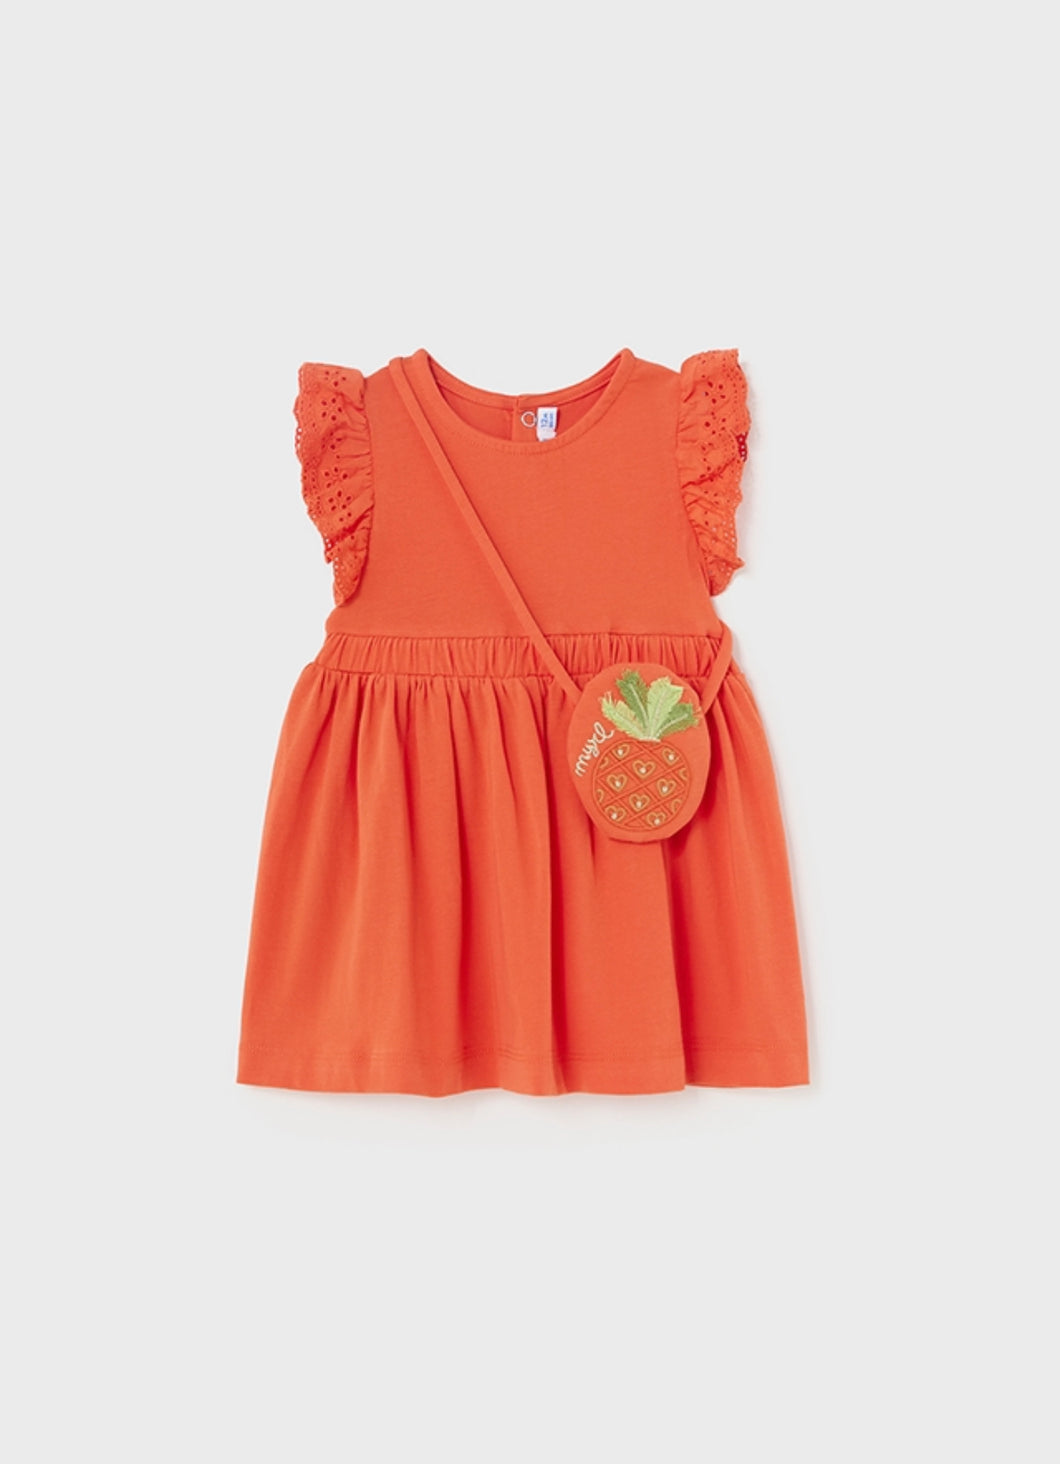 Dress - Orange Pineapple